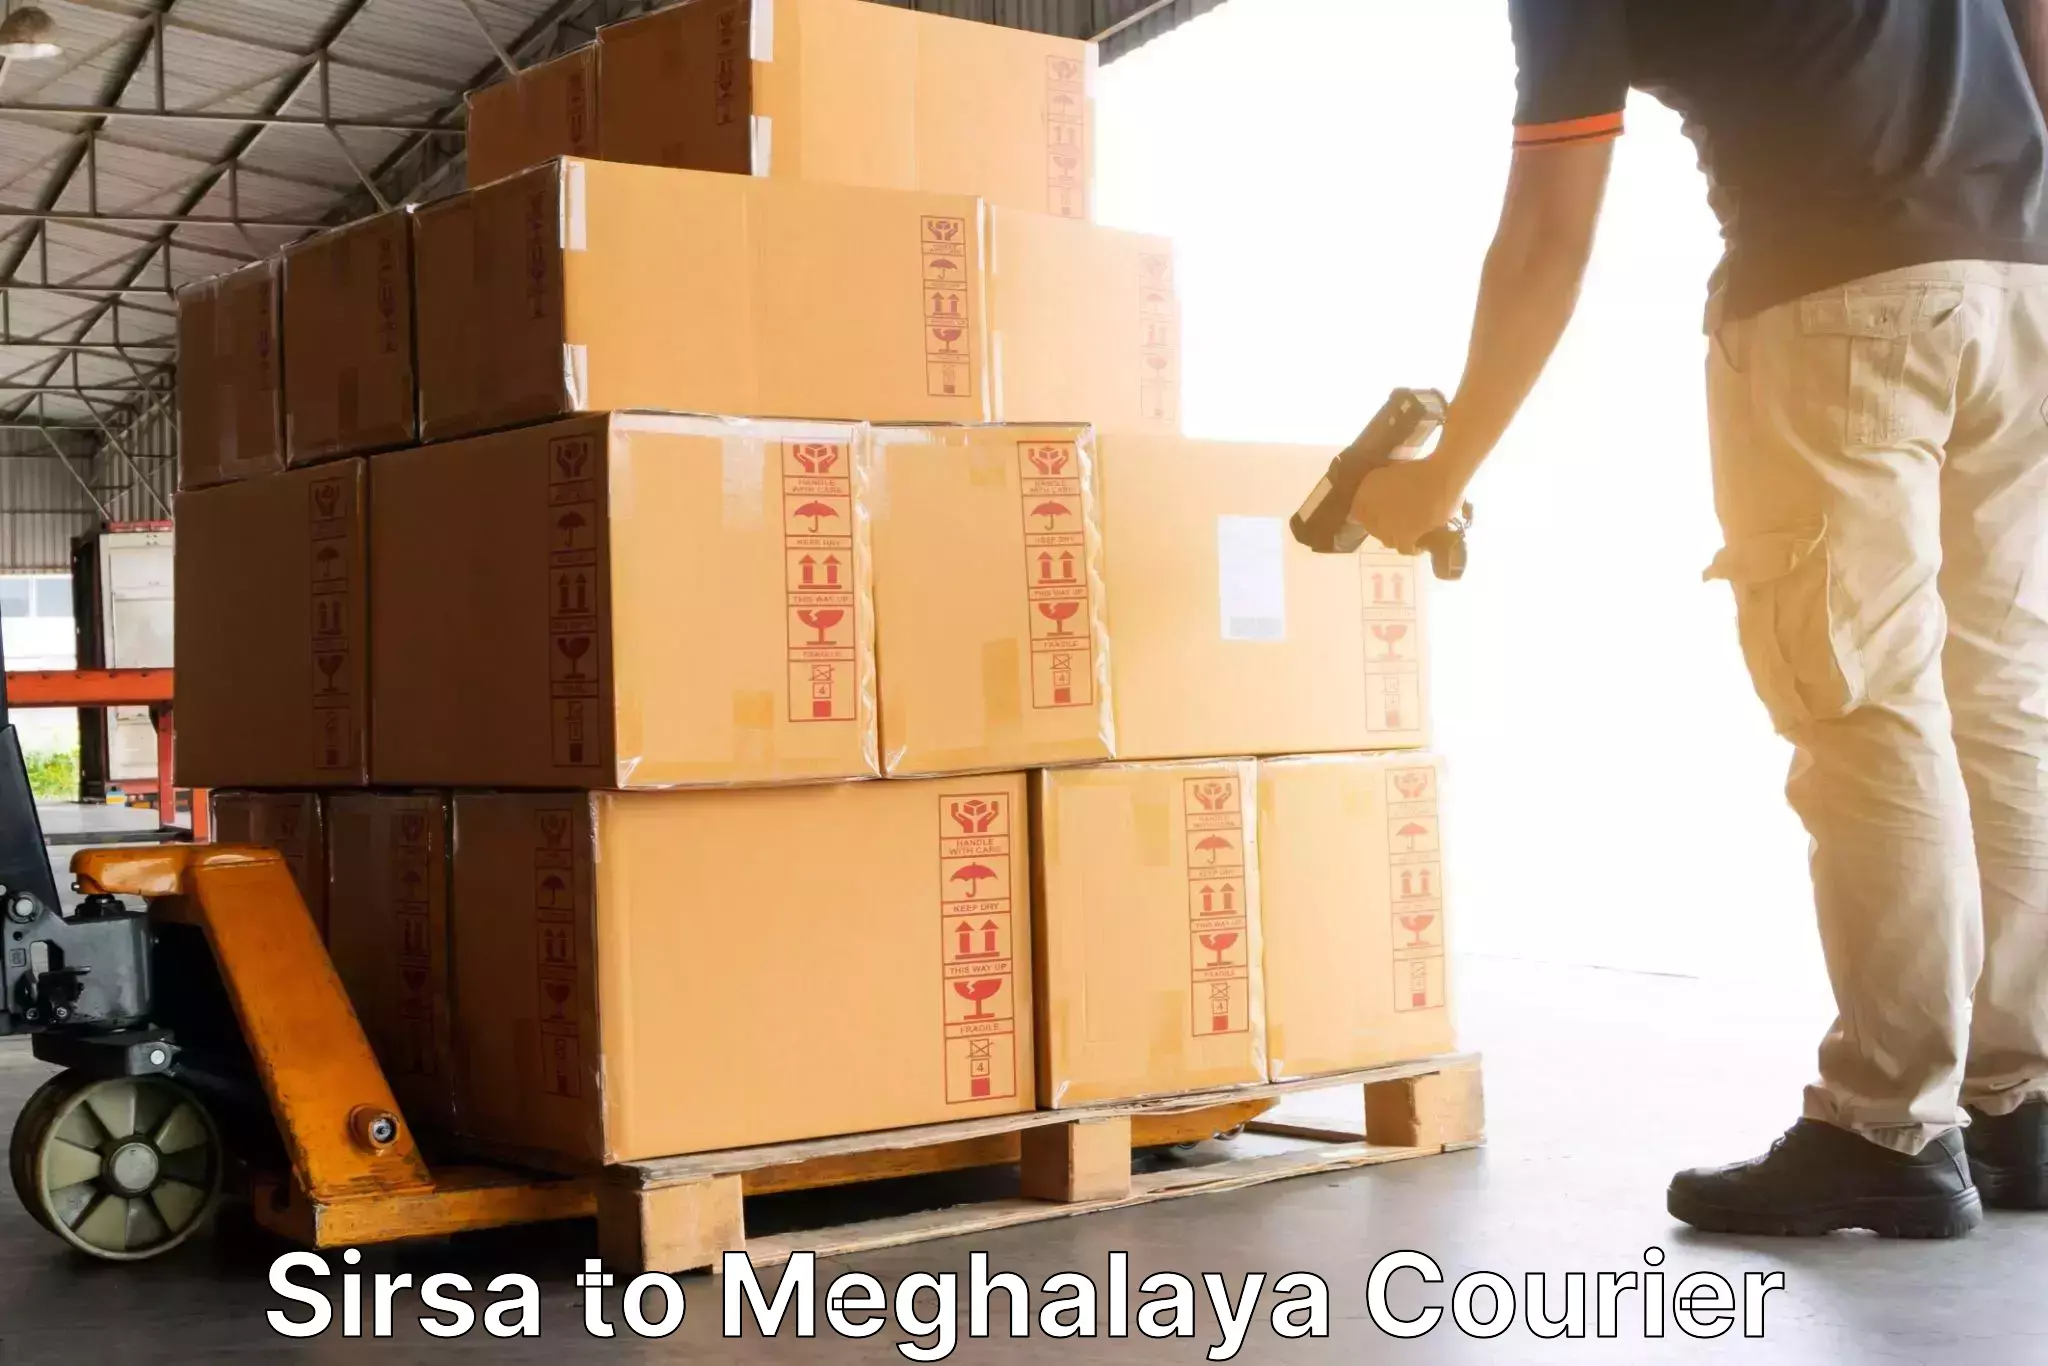 Supply chain efficiency Sirsa to Meghalaya